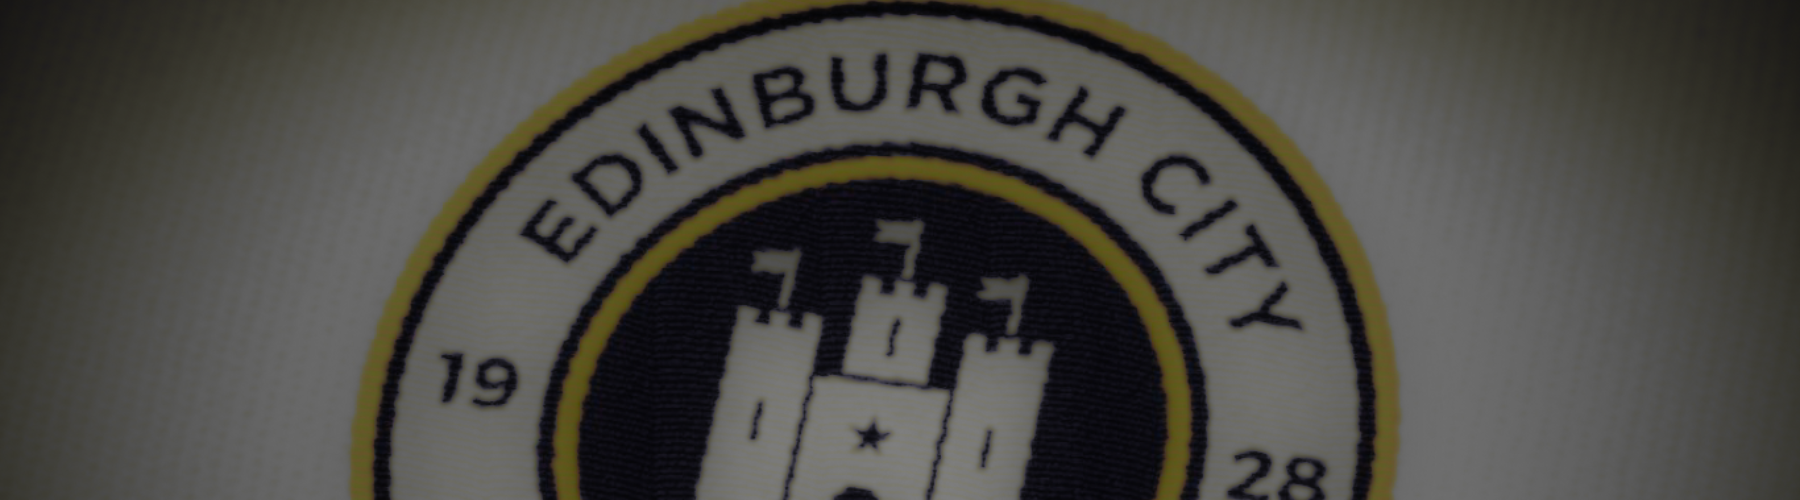 Edinburgh City FC Official Club Store